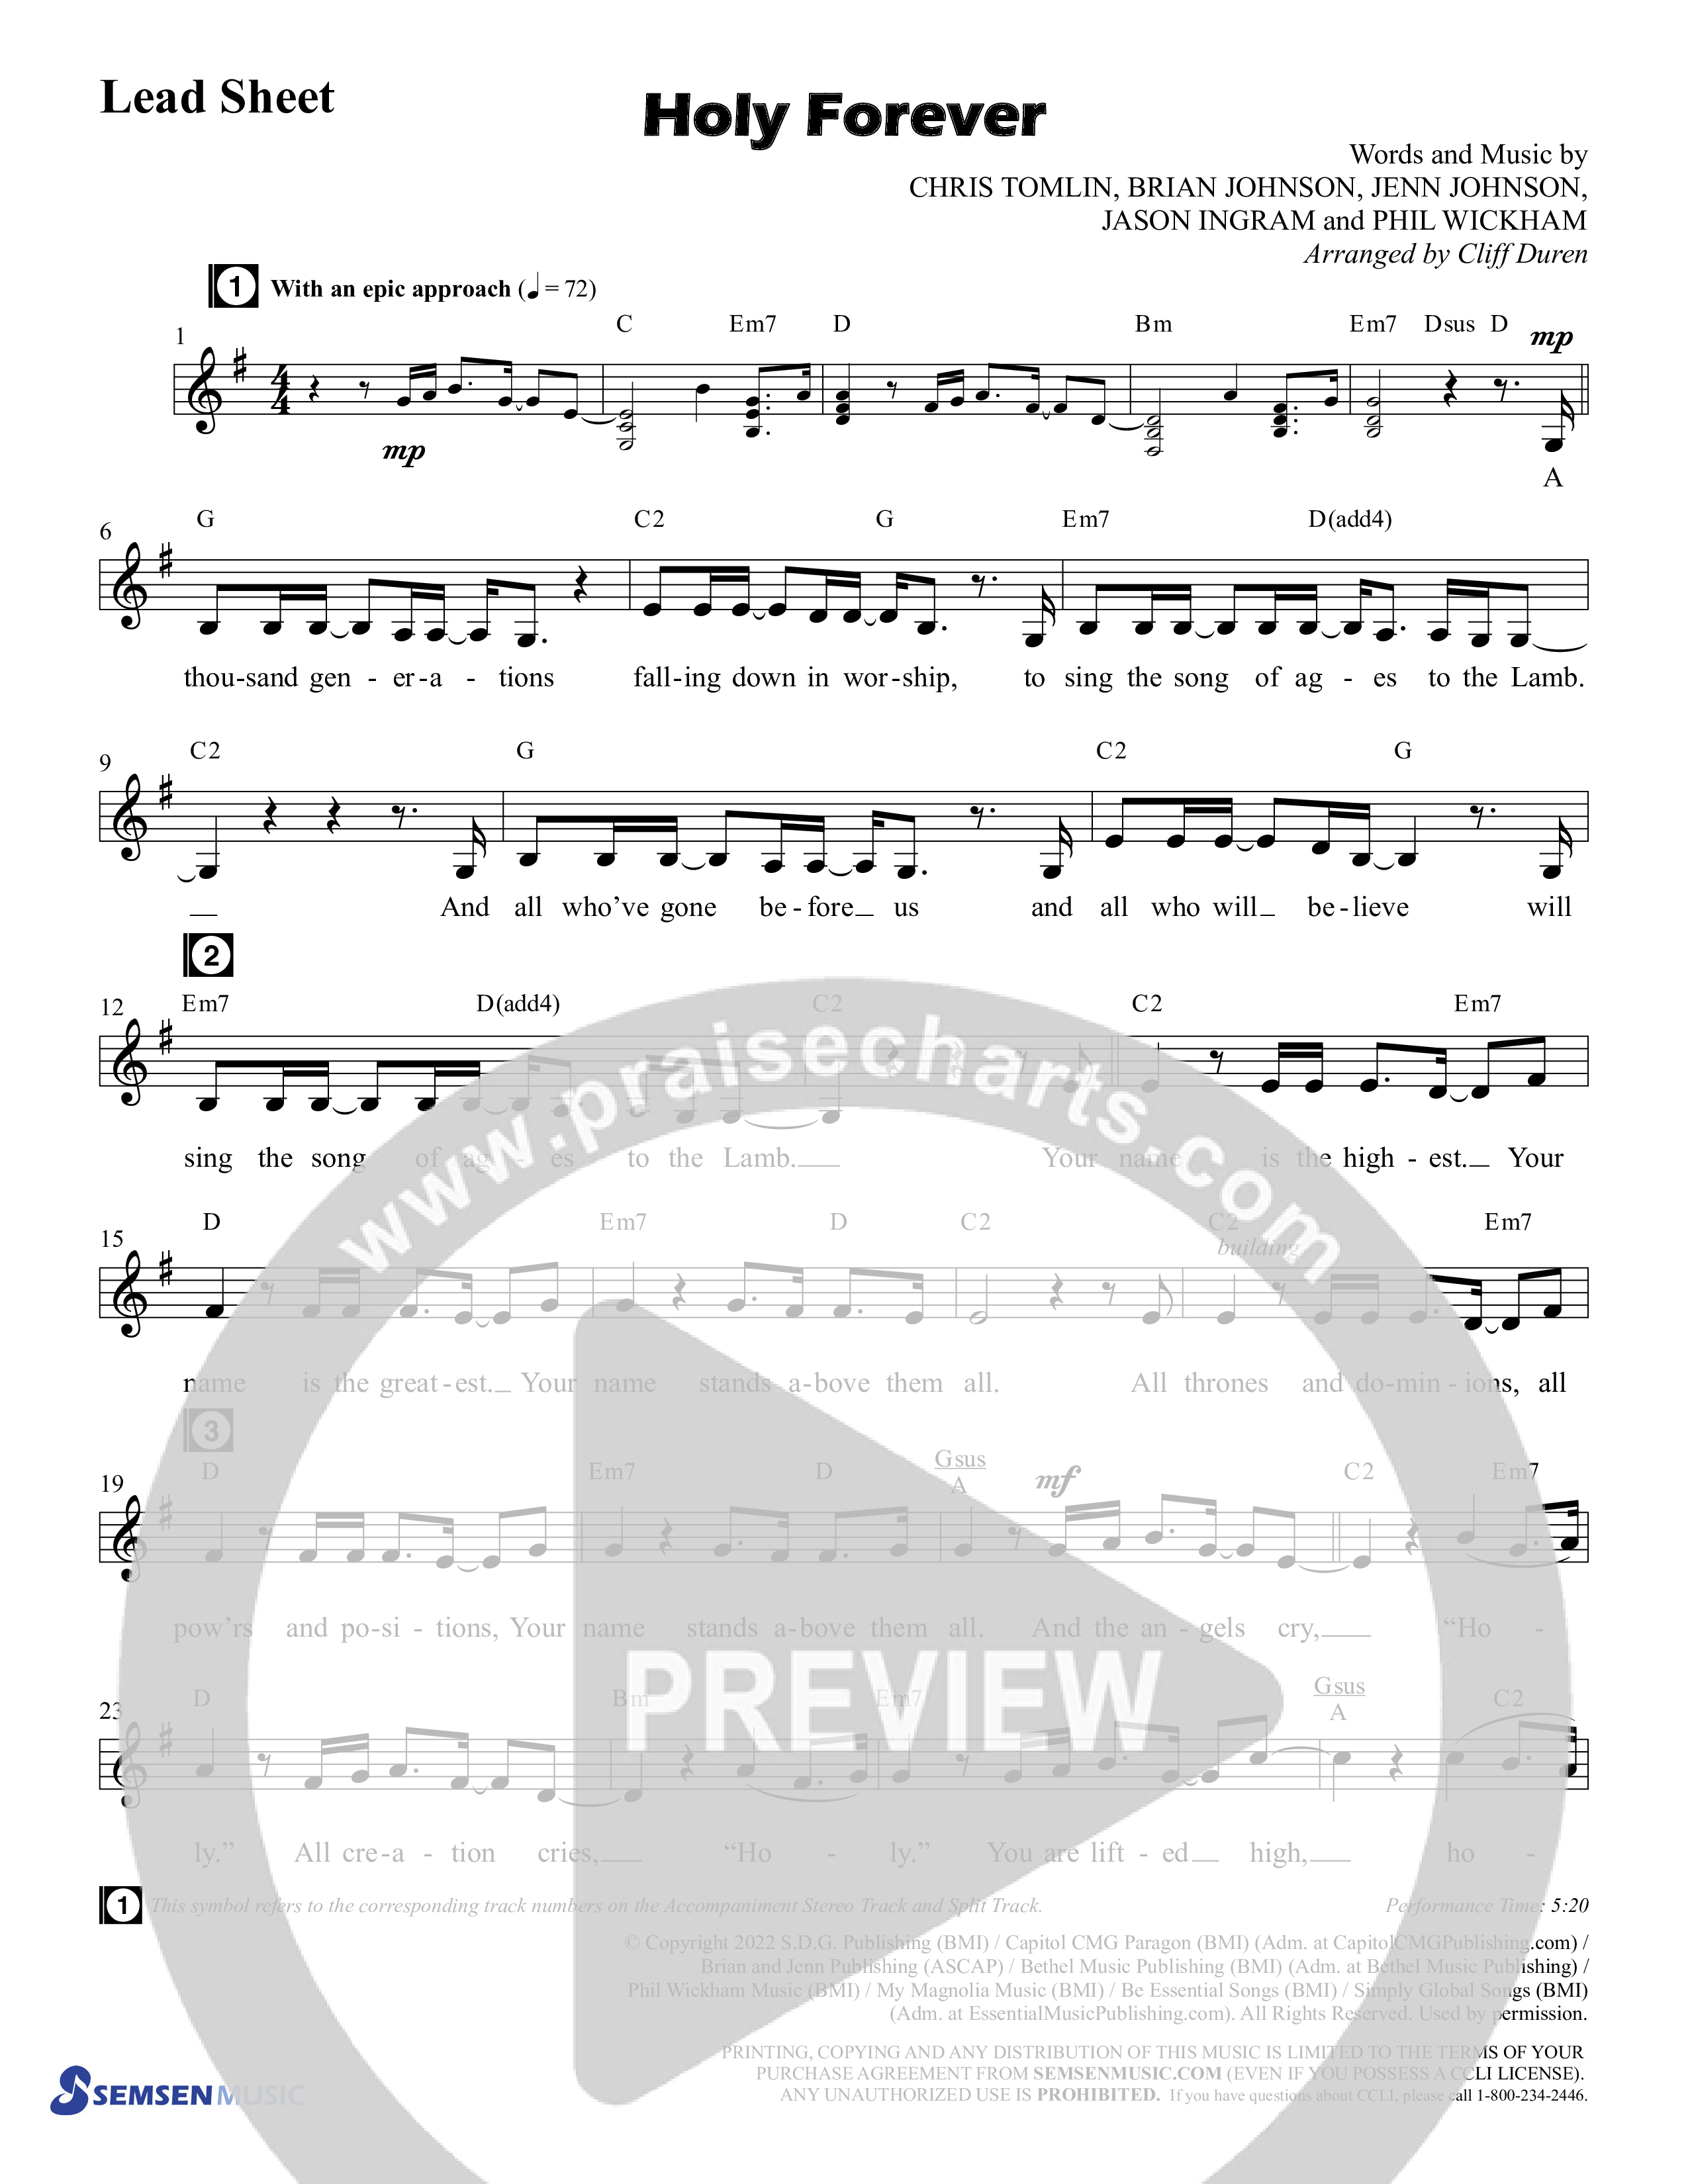 Holy Forever (Choral Anthem SATB) Chords & Lead Sheet (Semsen Music / Arr. Cliff Duren)